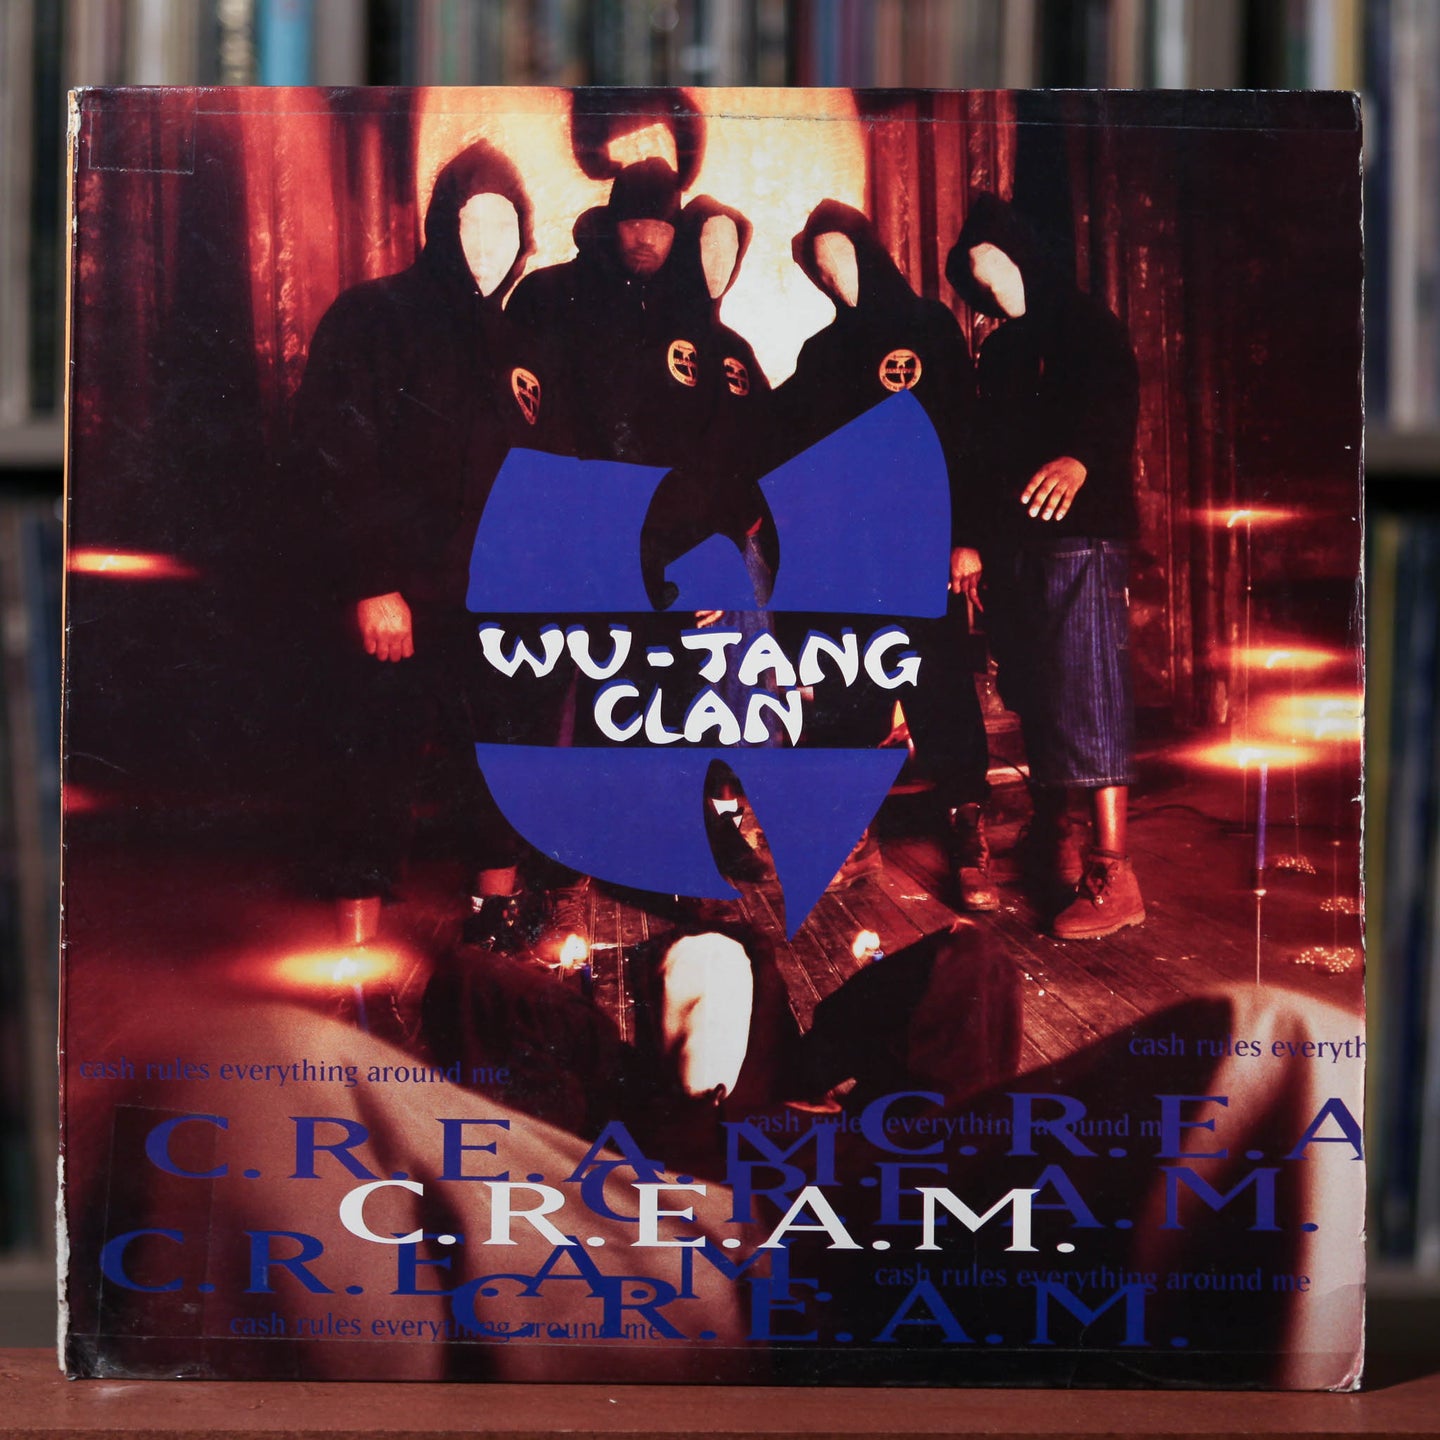 Wu-Tang Clan - C.R.E.A.M. (Cash Rules Everything Around Me) - 1994 RCA, VG/VG